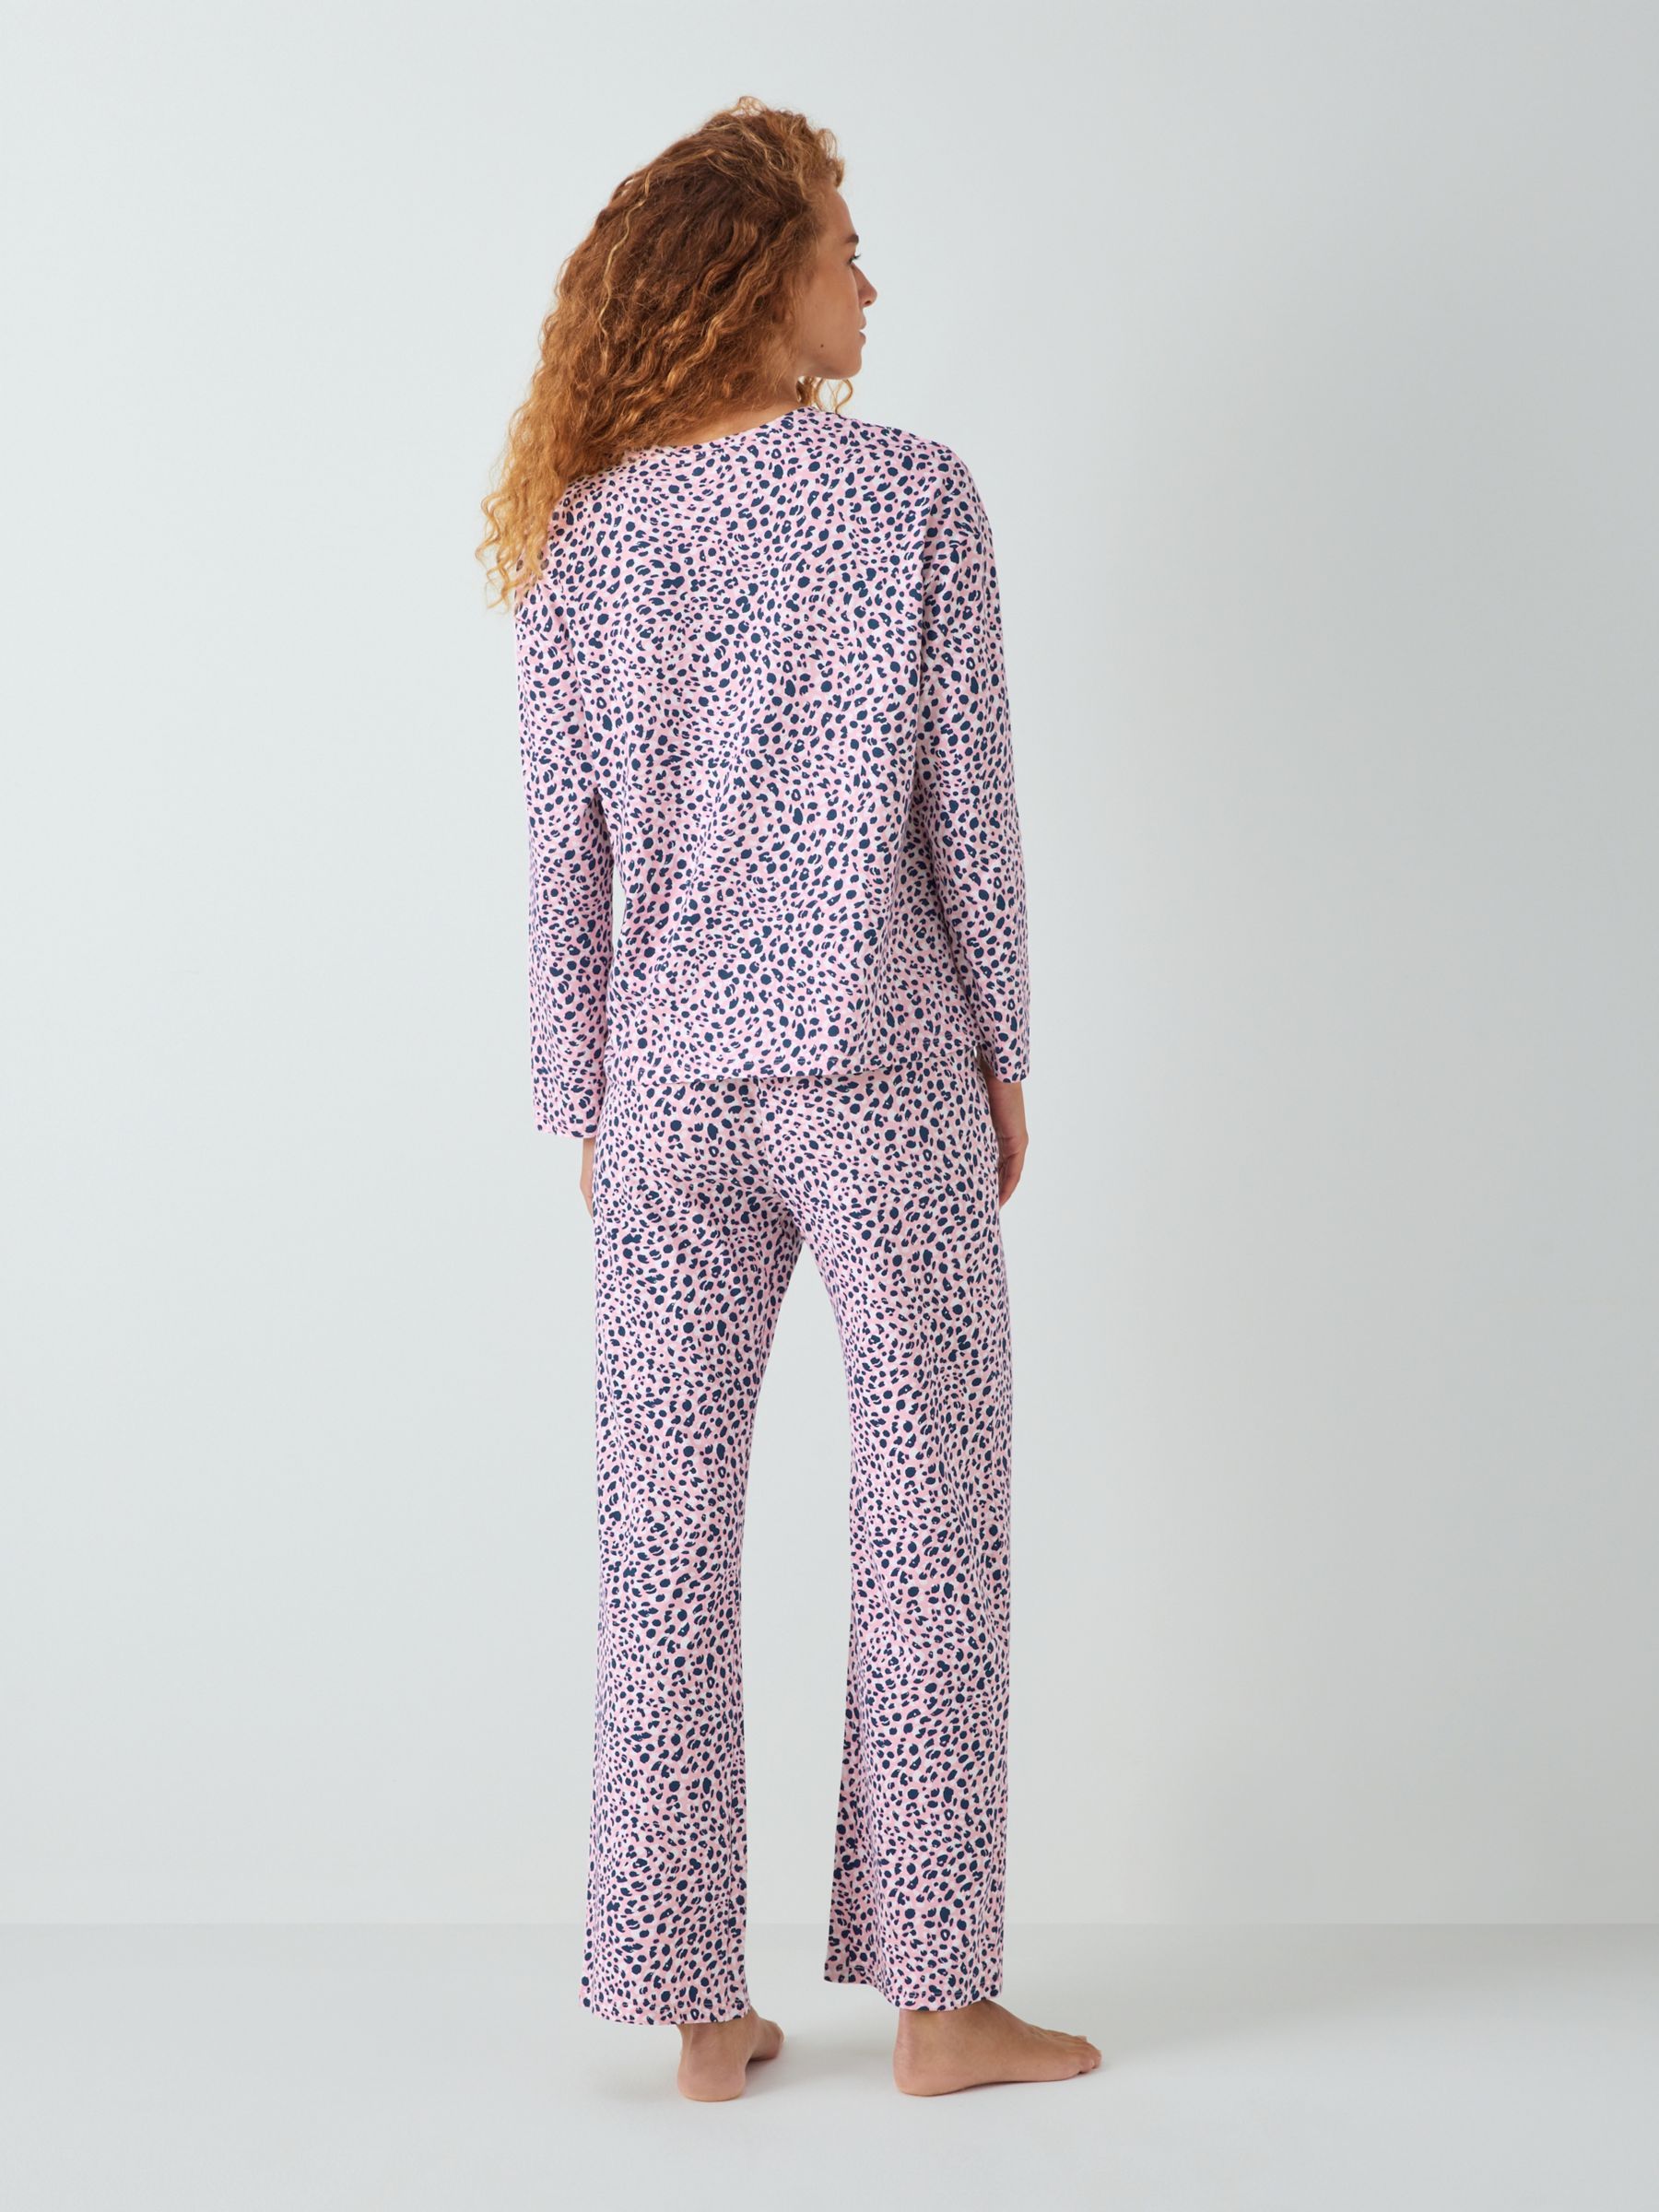 John Lewis ANYDAY Maeve Animal Print Jersey Pyjama Set, Pink